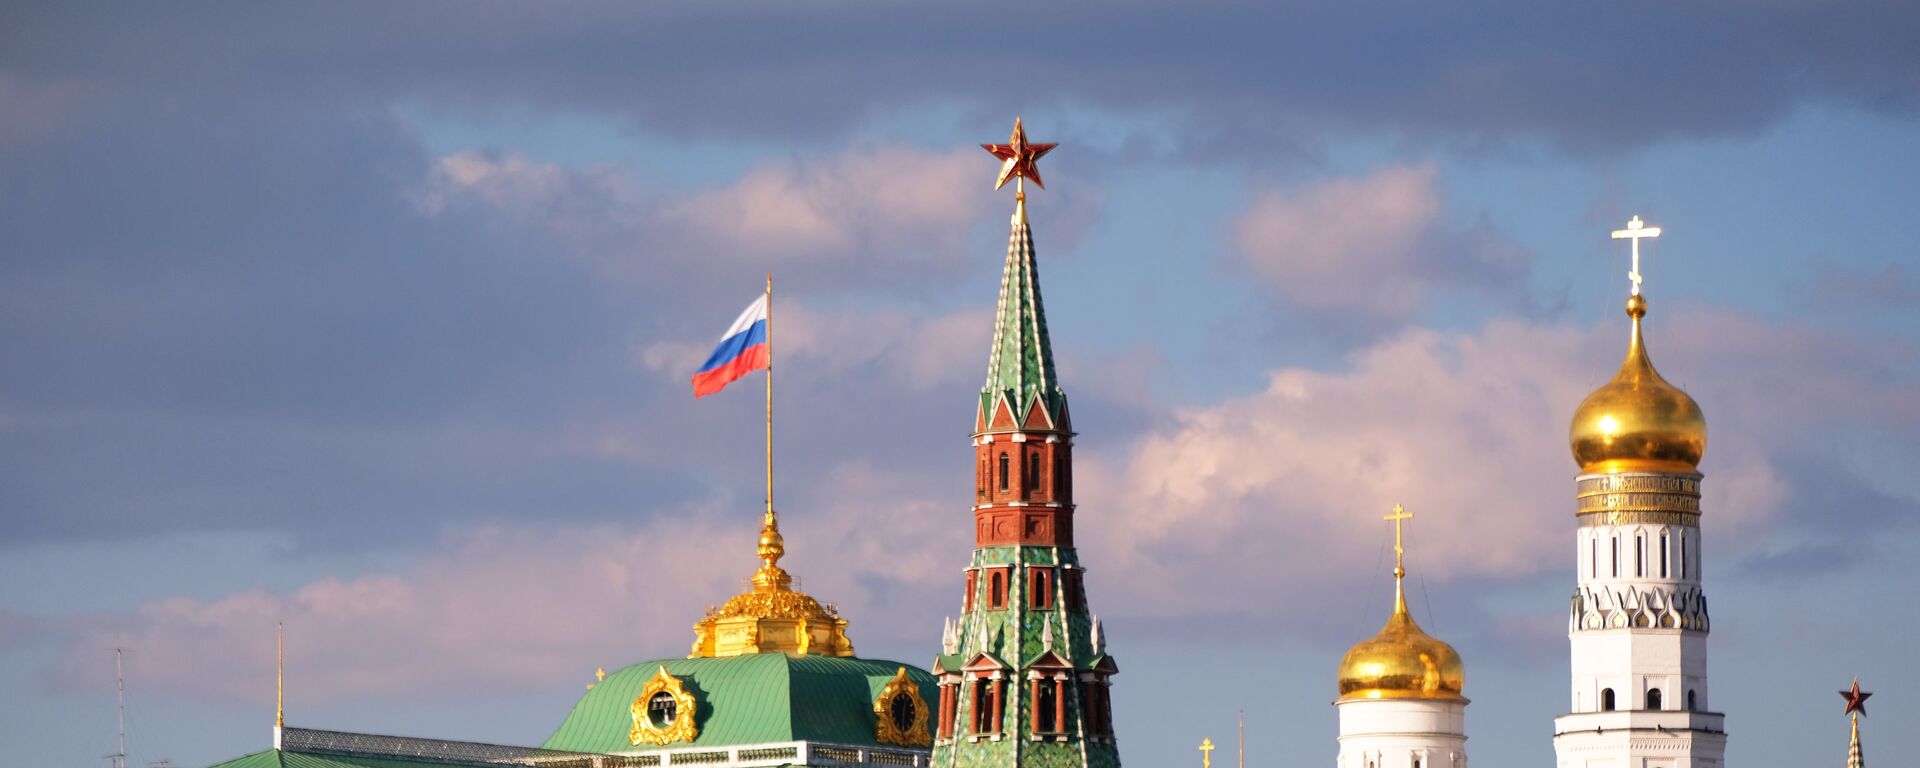 El Kremlin de Moscú - Sputnik Mundo, 1920, 04.06.2021